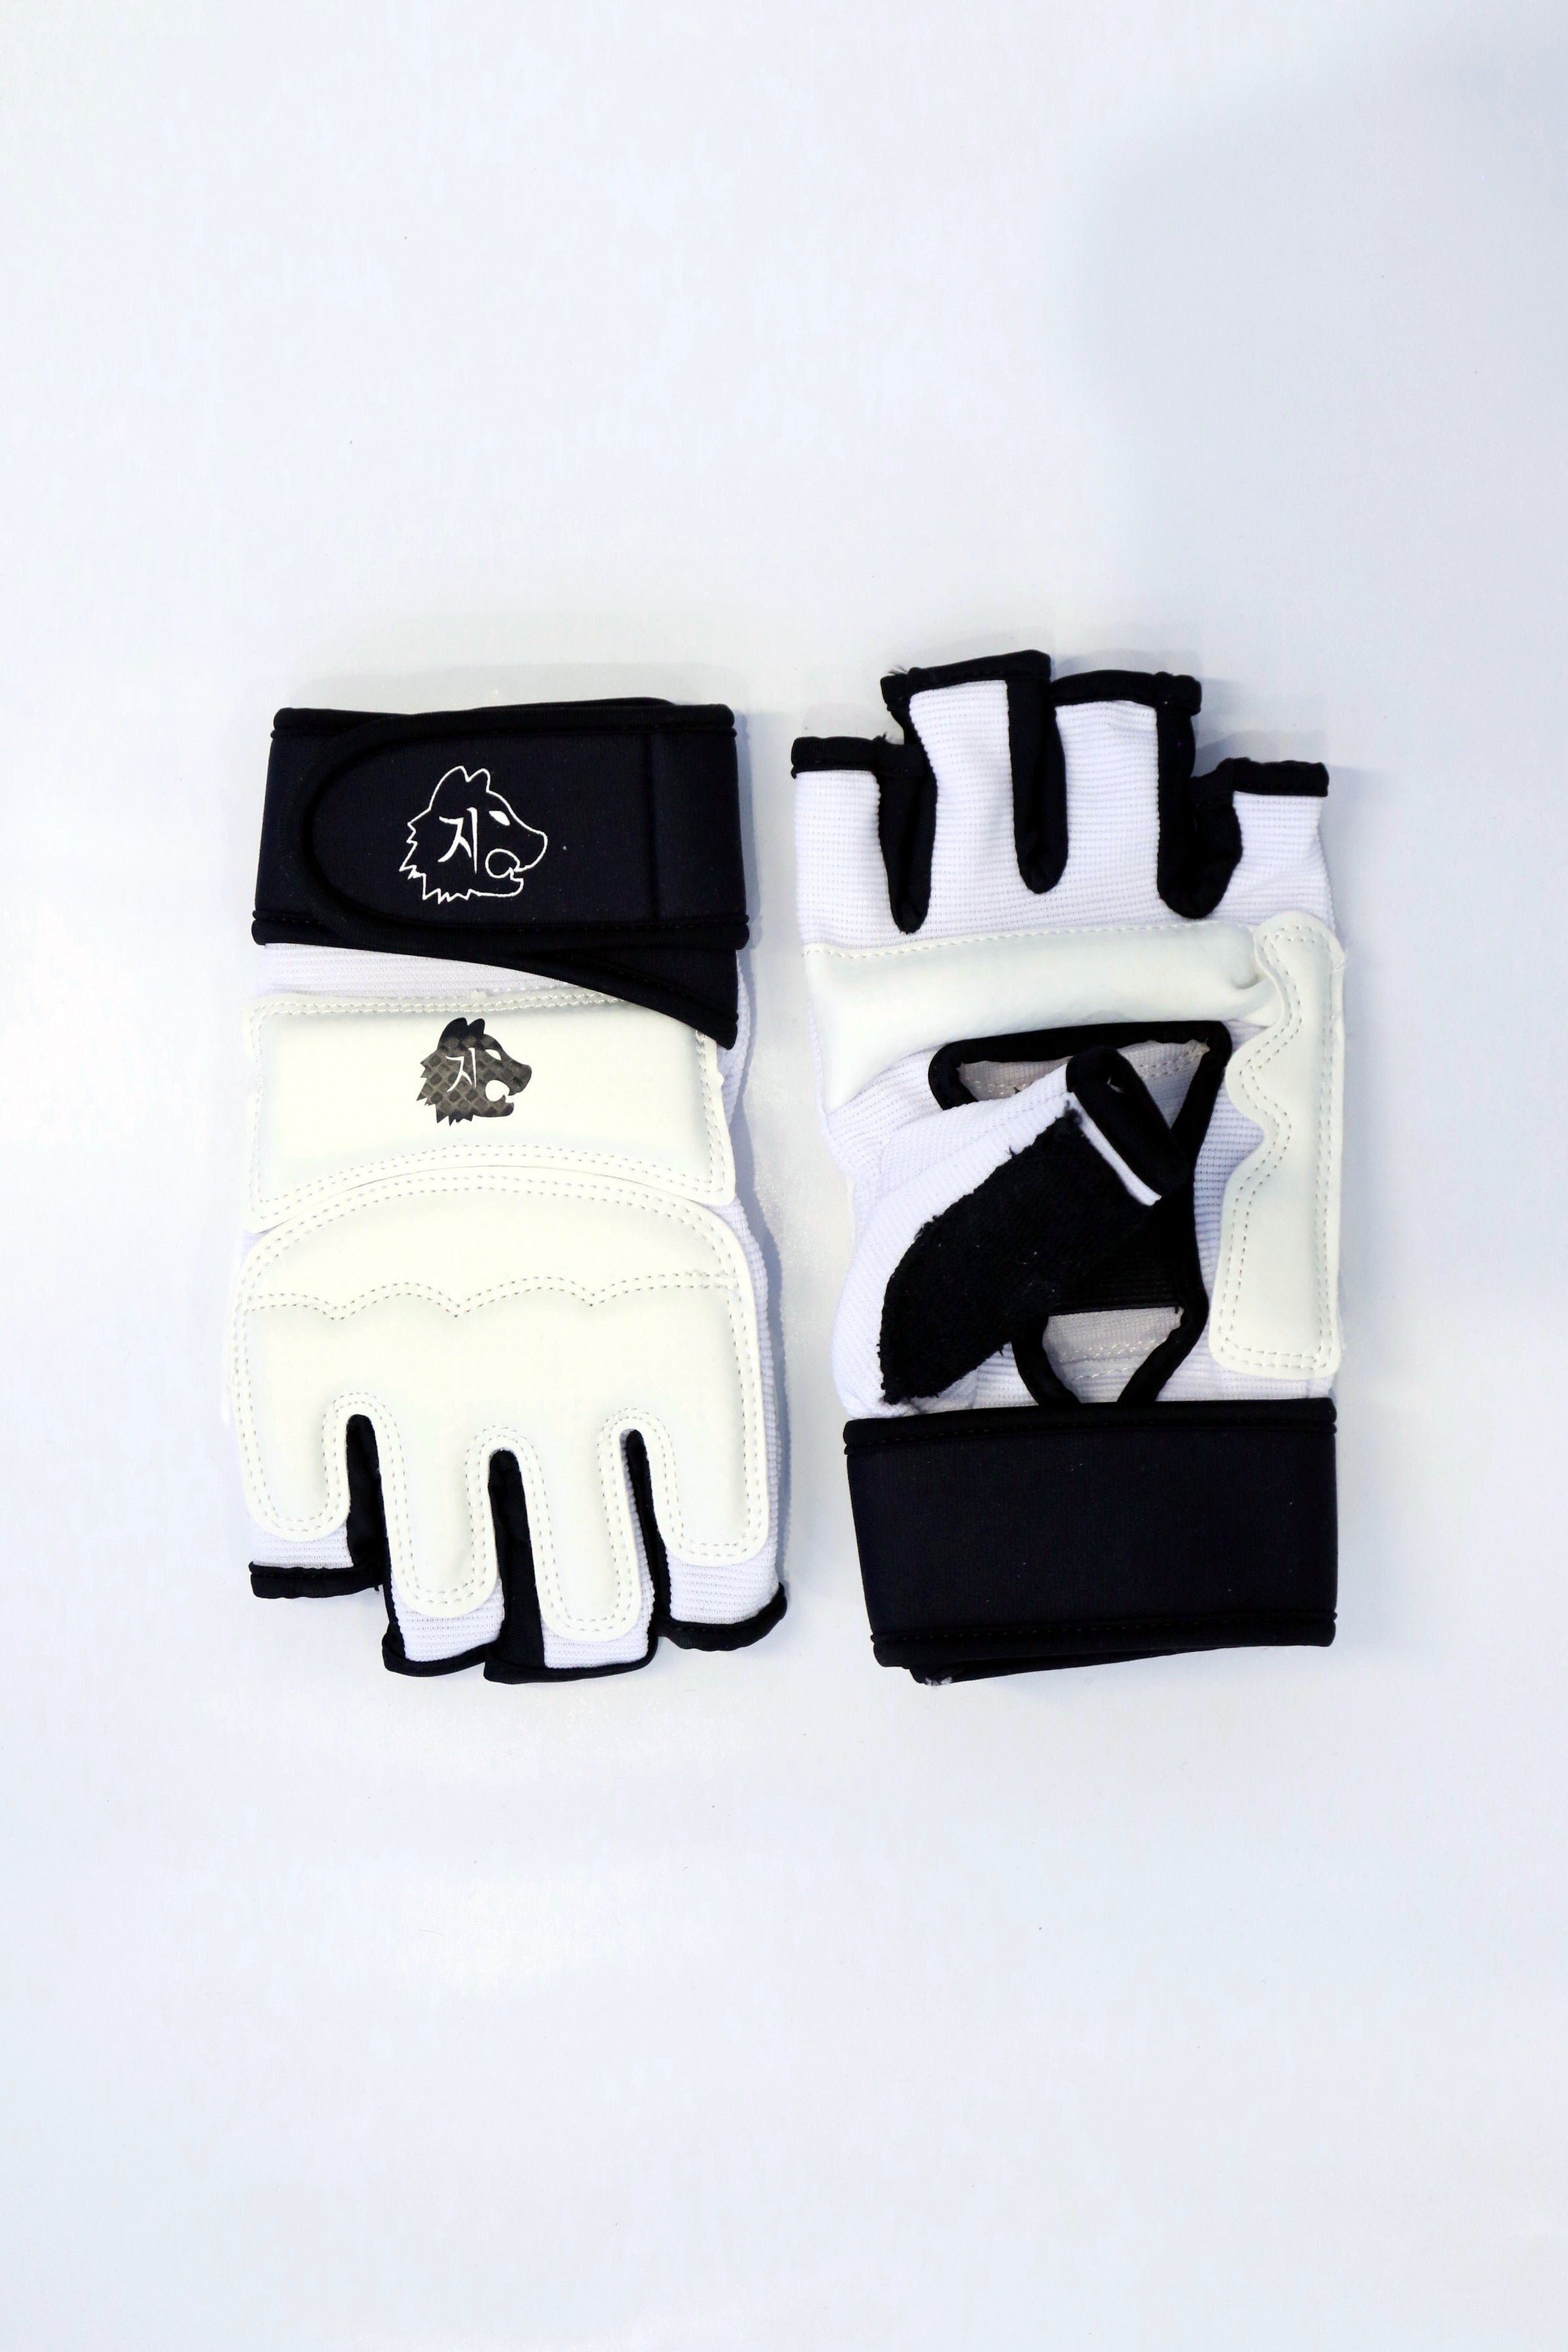 Zido World Taekwondo (WT) Style Glove